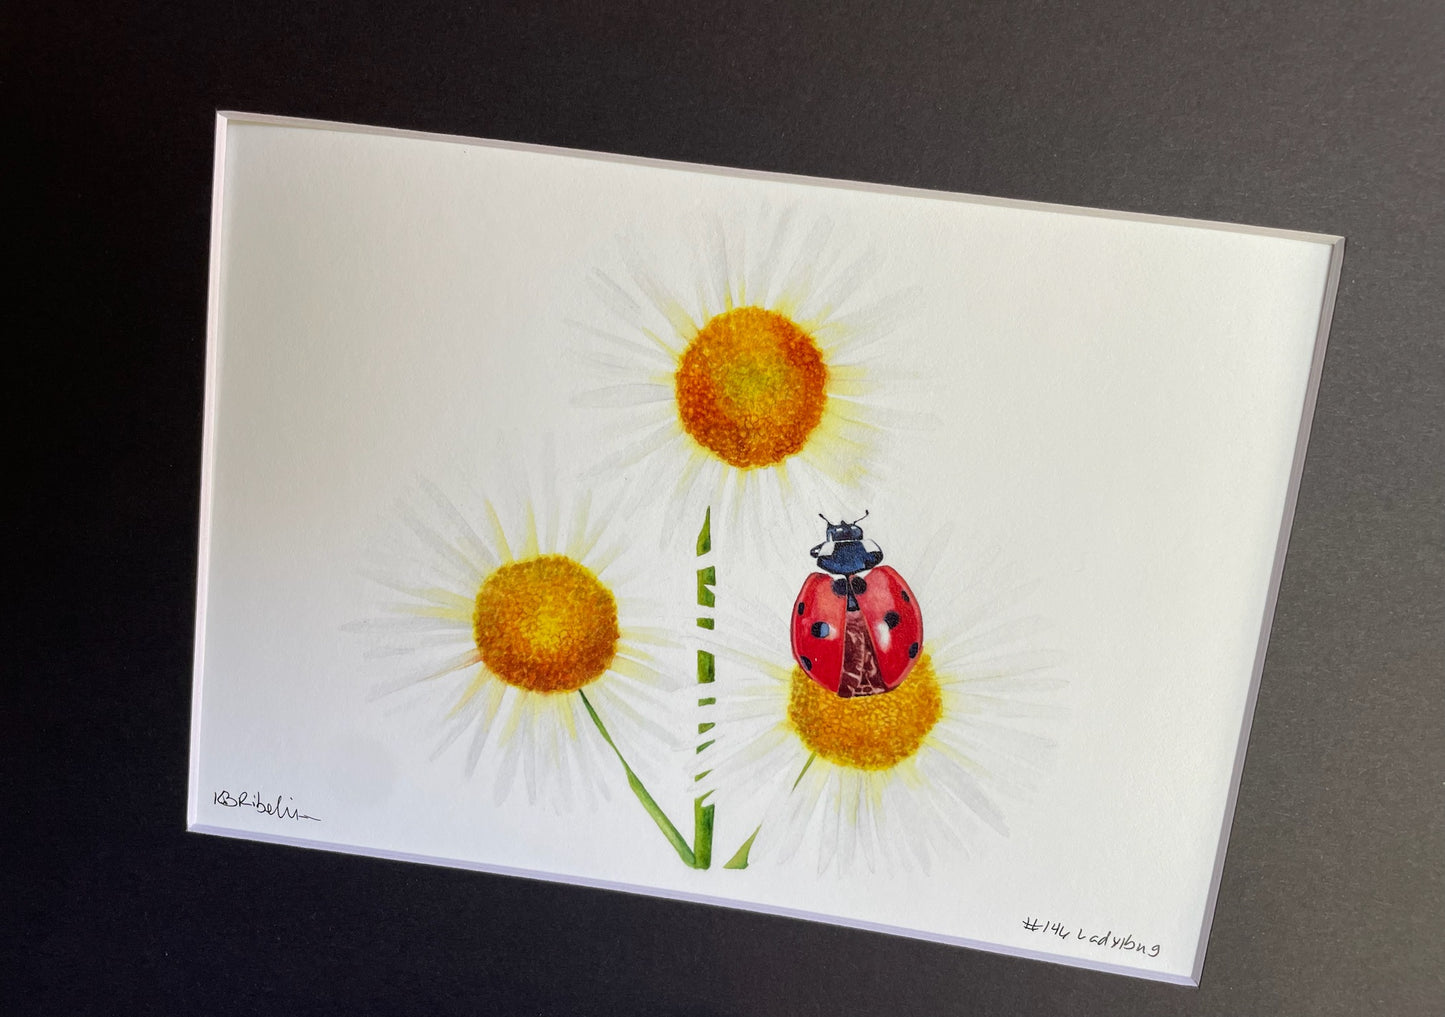 Ladybug - Bird Art by KB - Giclee Print with Black Mat